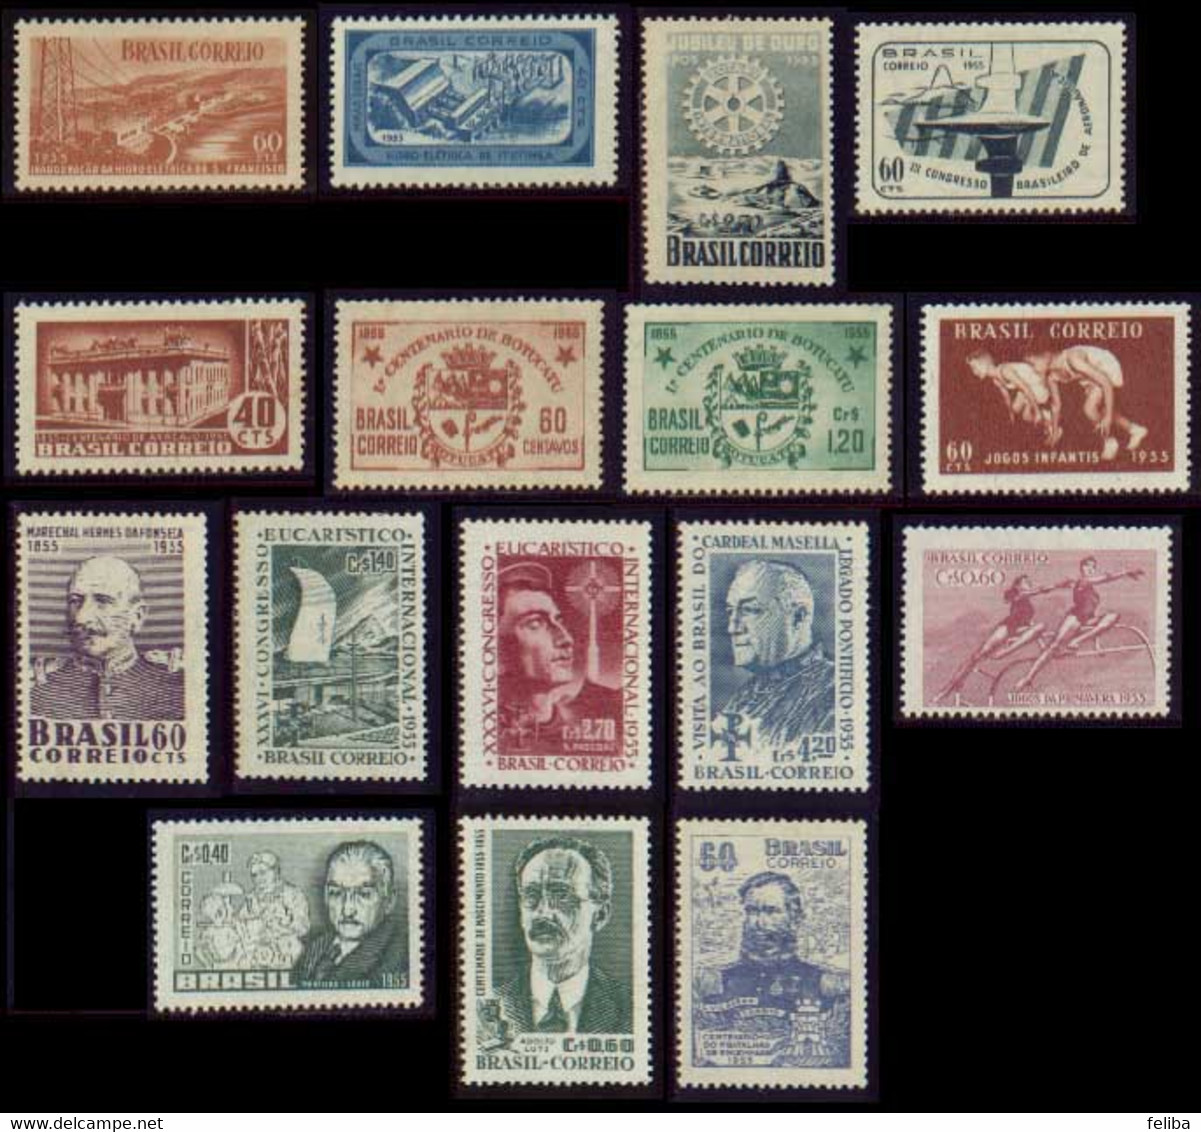 Brazil 1955 Unused Commemorative Stamps - Full Years